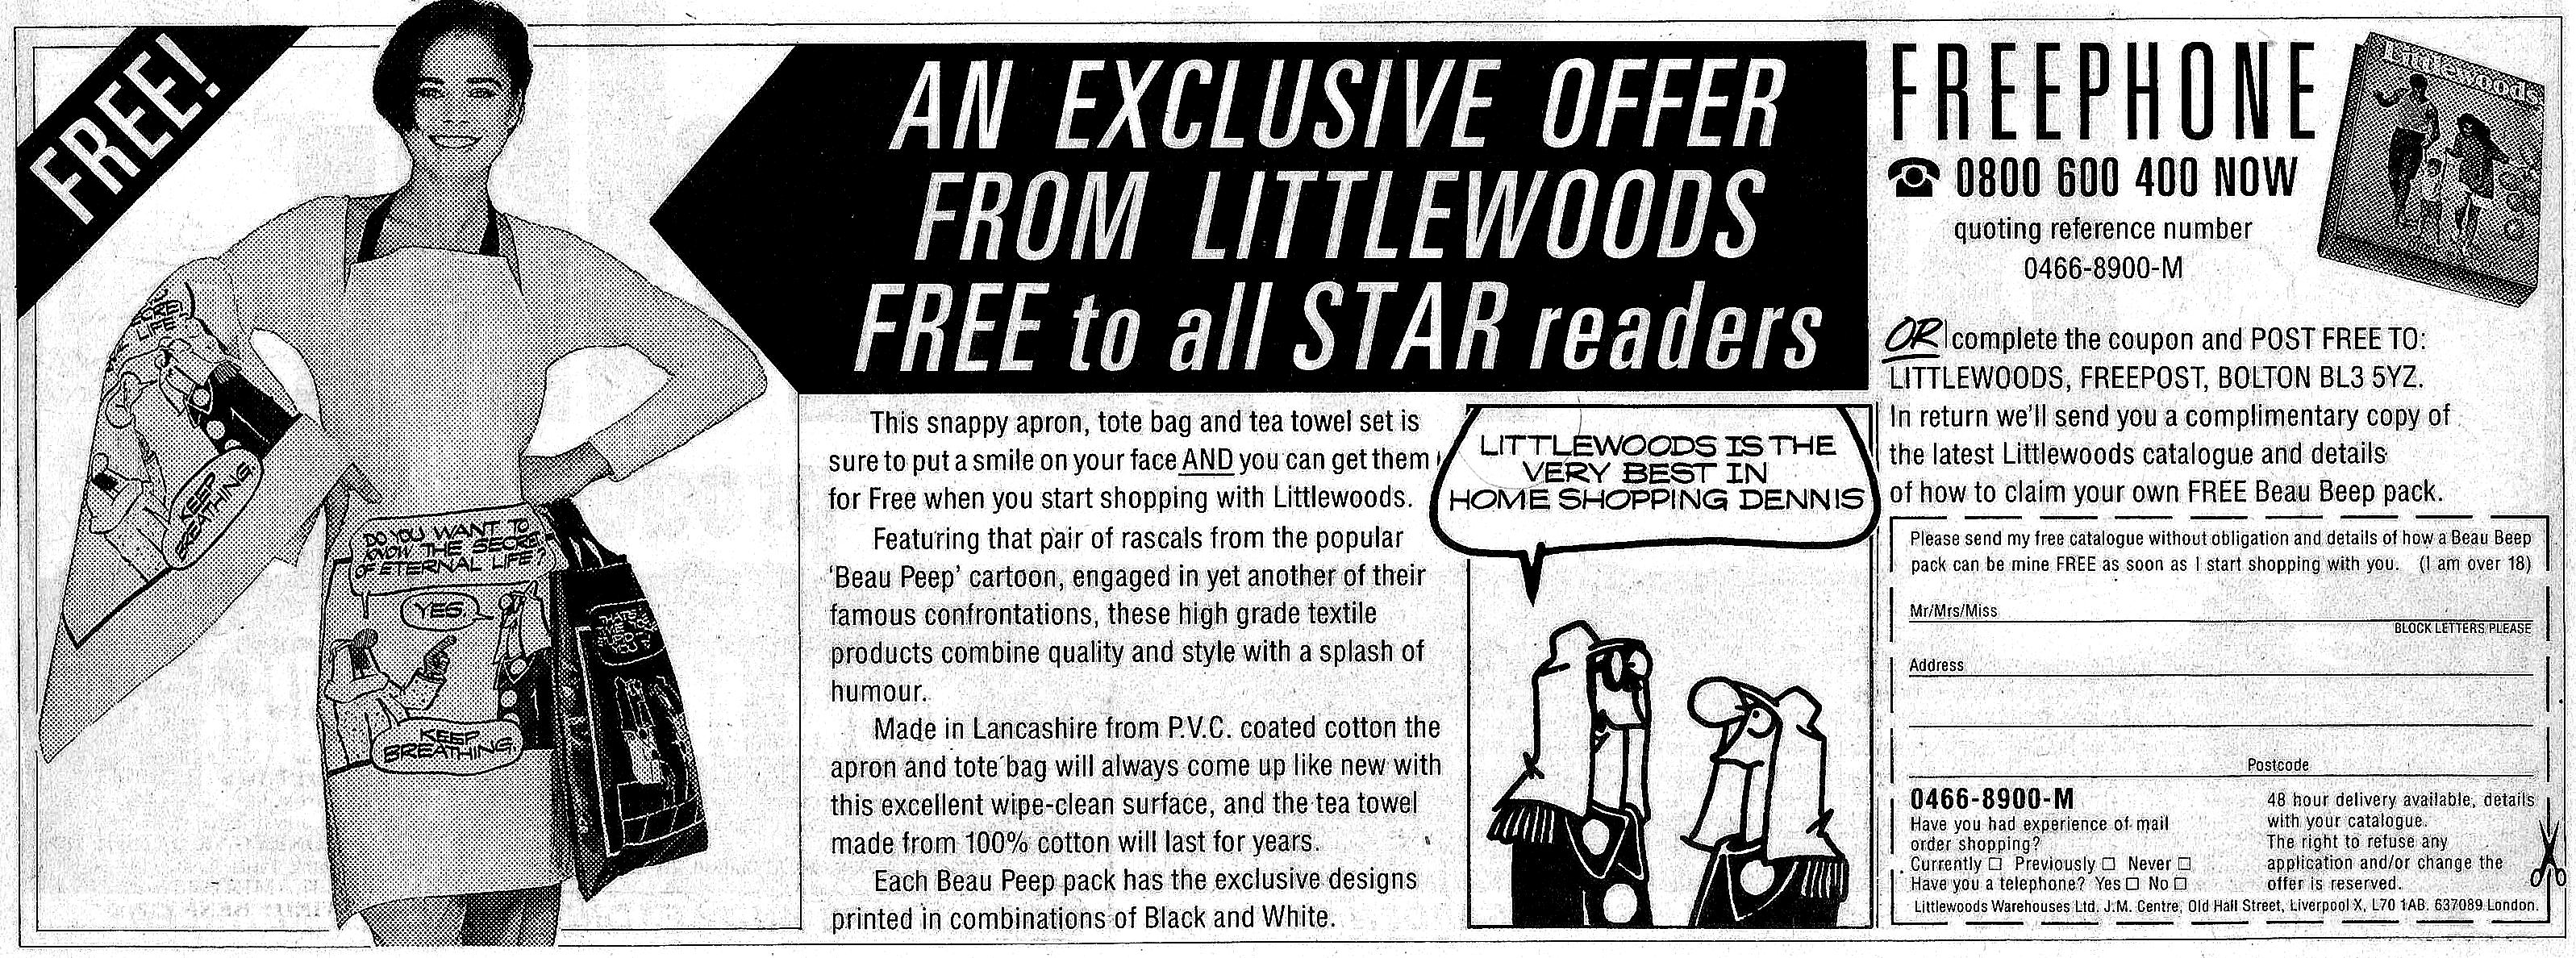 littlewoods ad